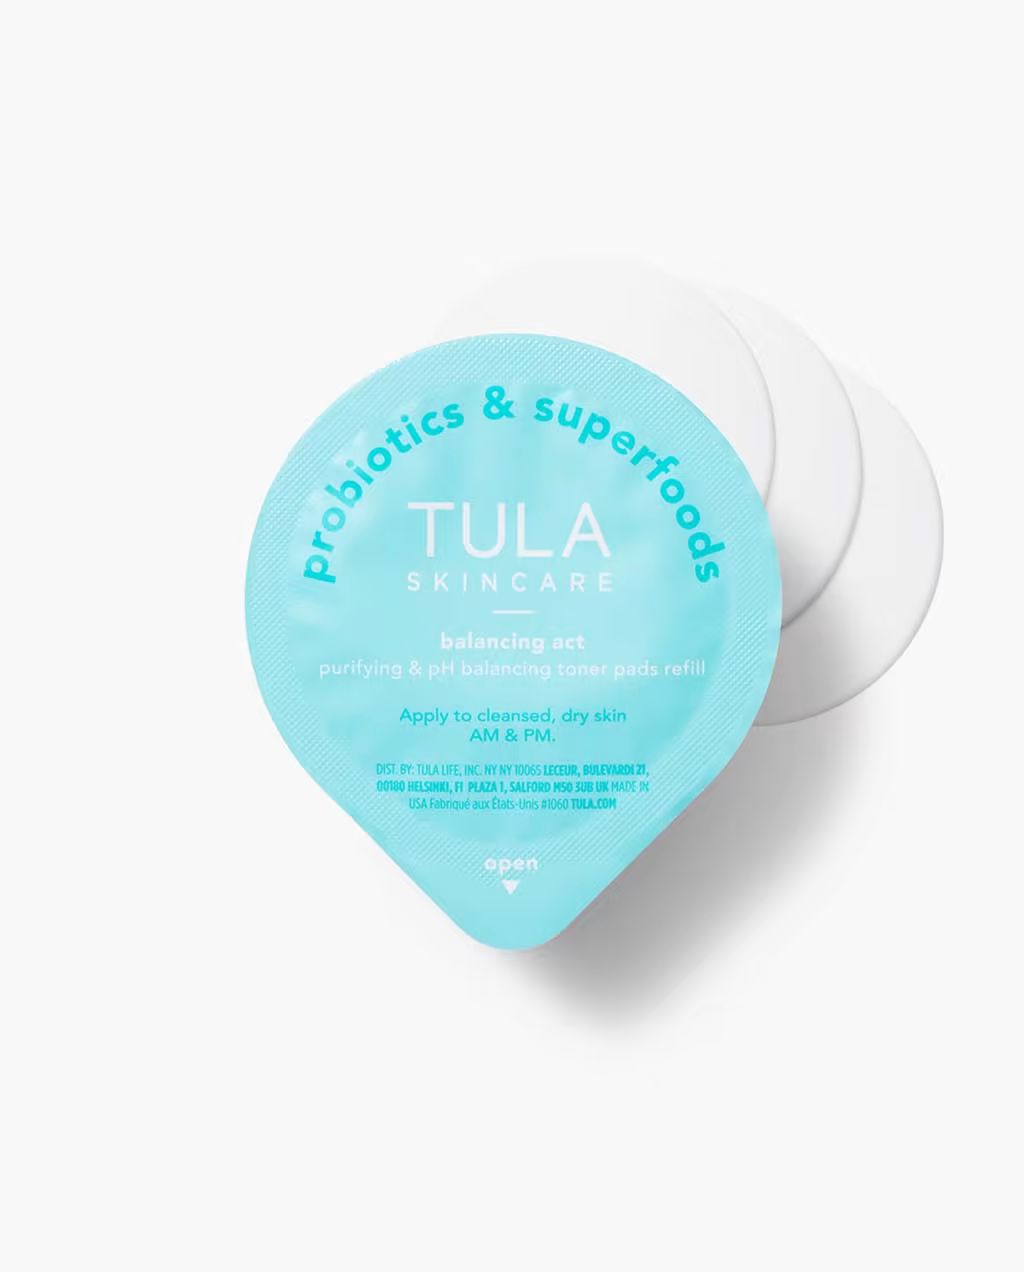 purifying & pH balancing biodegradable toner pads refill | Tula Skincare